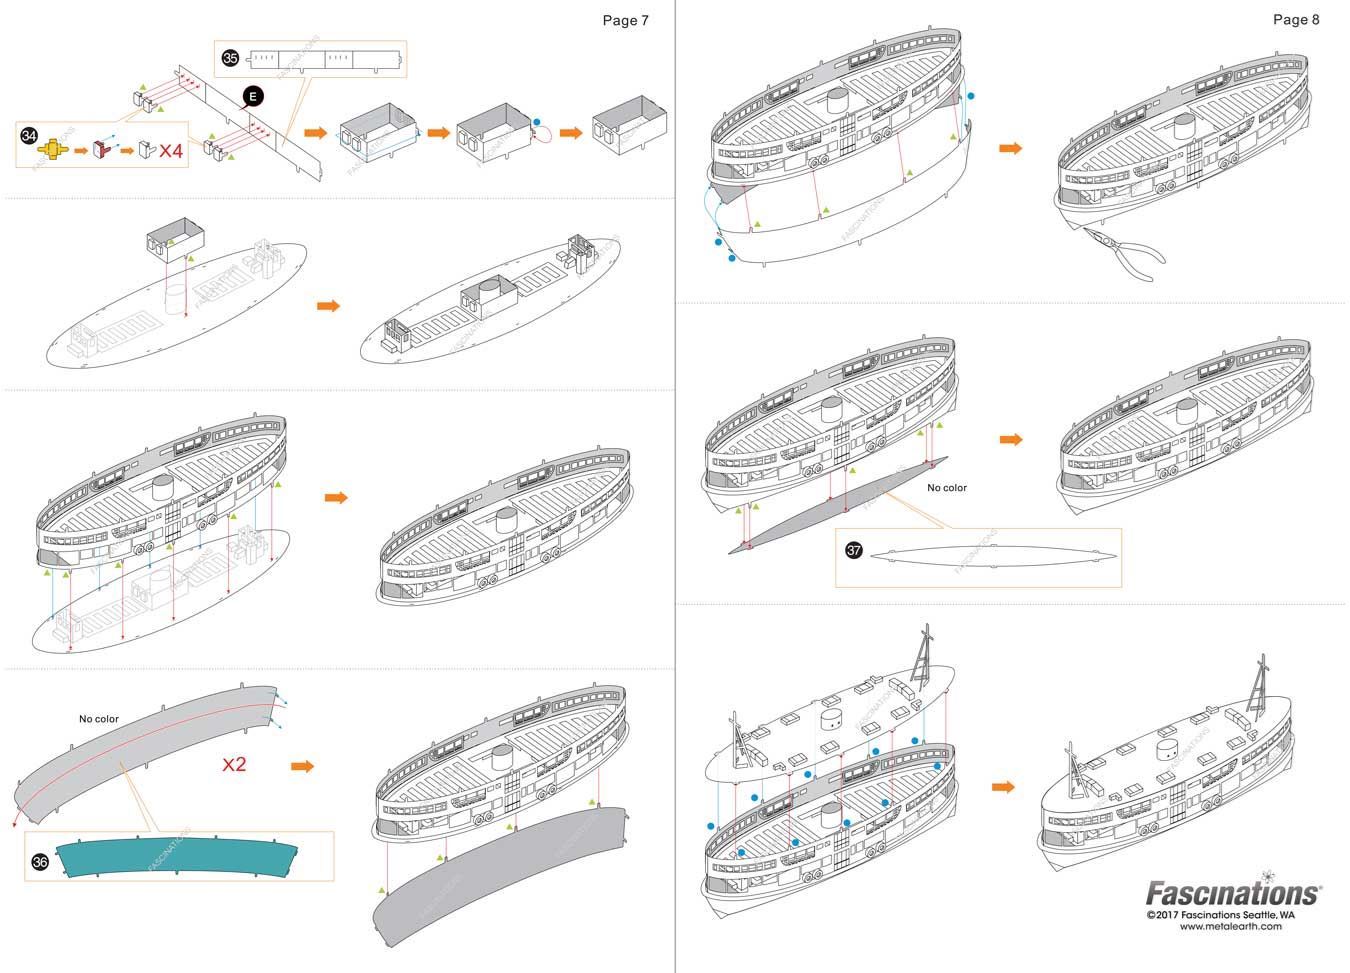 Hong Kong Star Ferry Metal Earth 3D Laser Cut Metal Model MMS135 Fascinations 